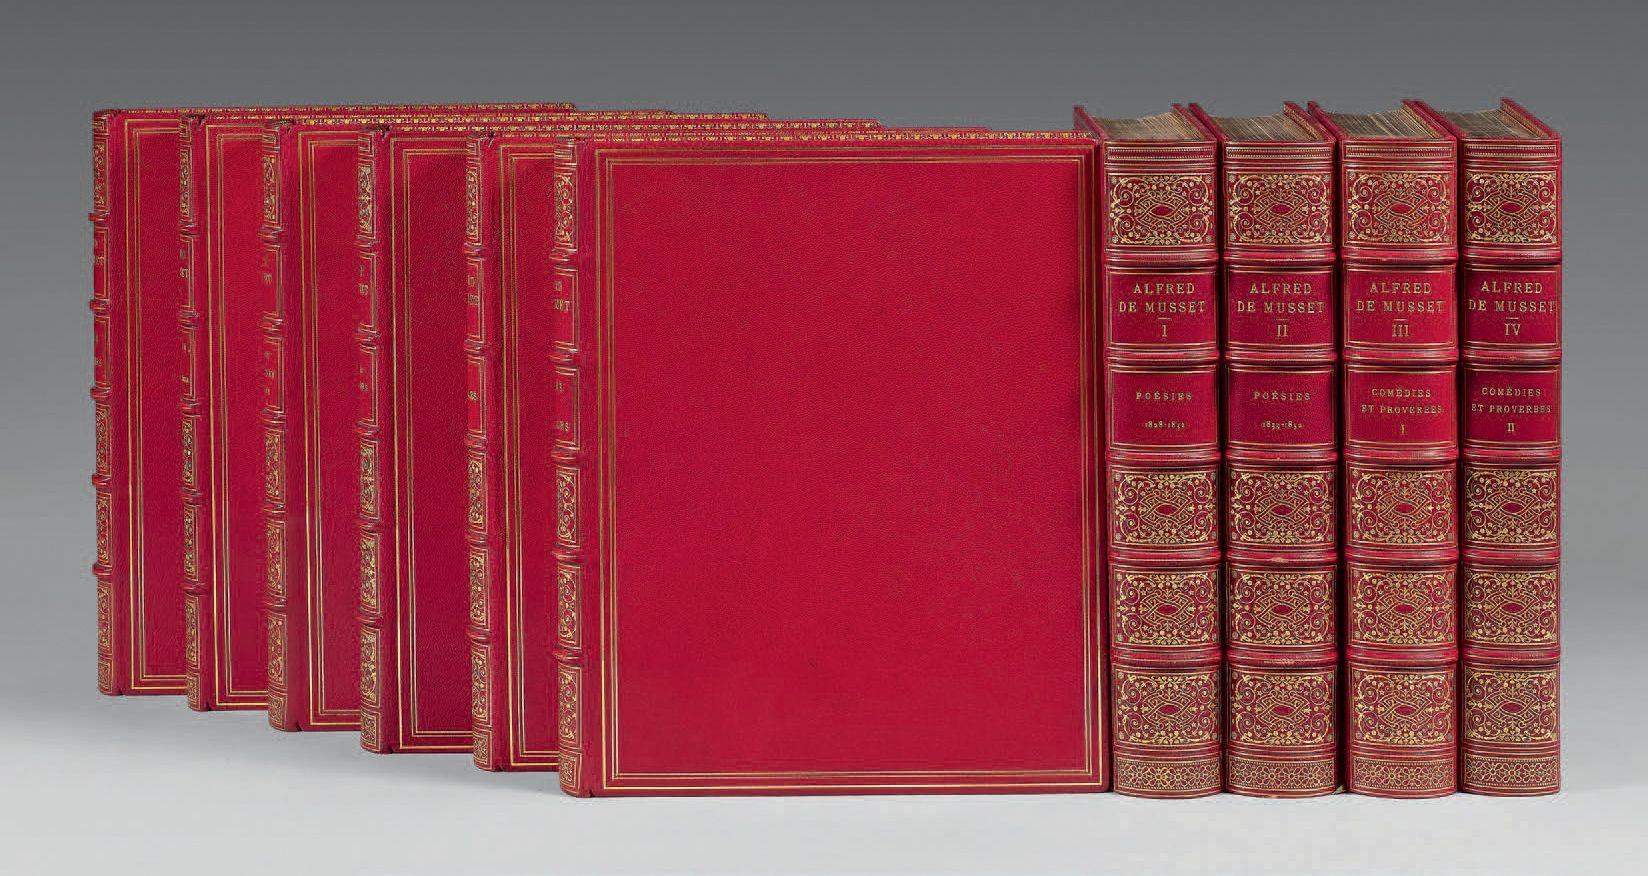 MUSSET (Alfred de). - Obras (9 vols.). -- Obras póstumas. París, Alphonse
Lemerr&hellip;